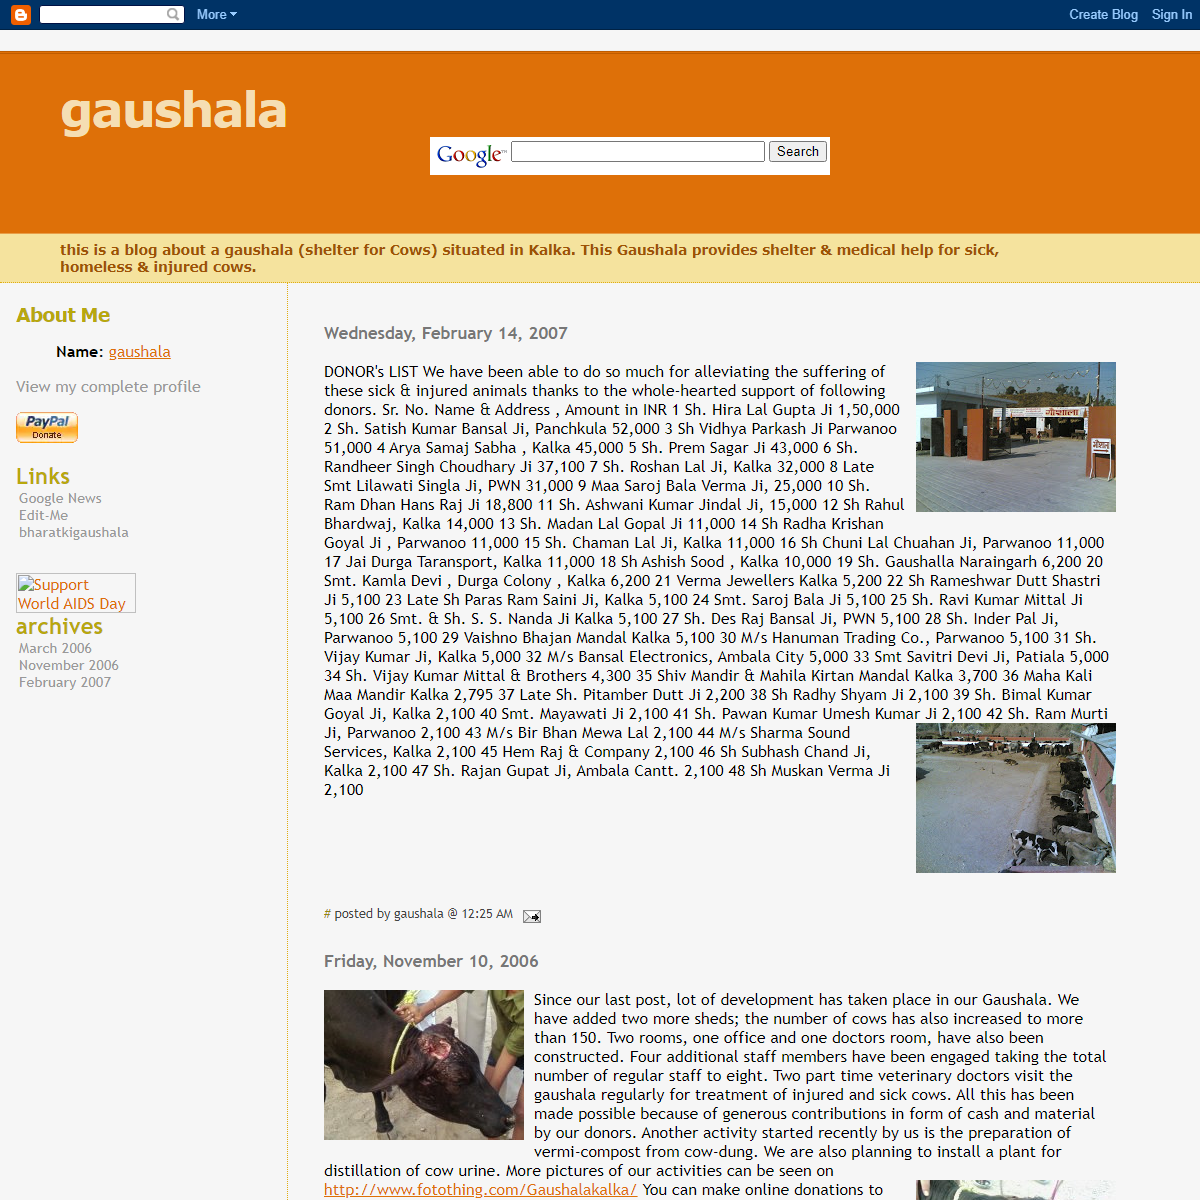 A complete backup of https://gaushala.blogspot.com/